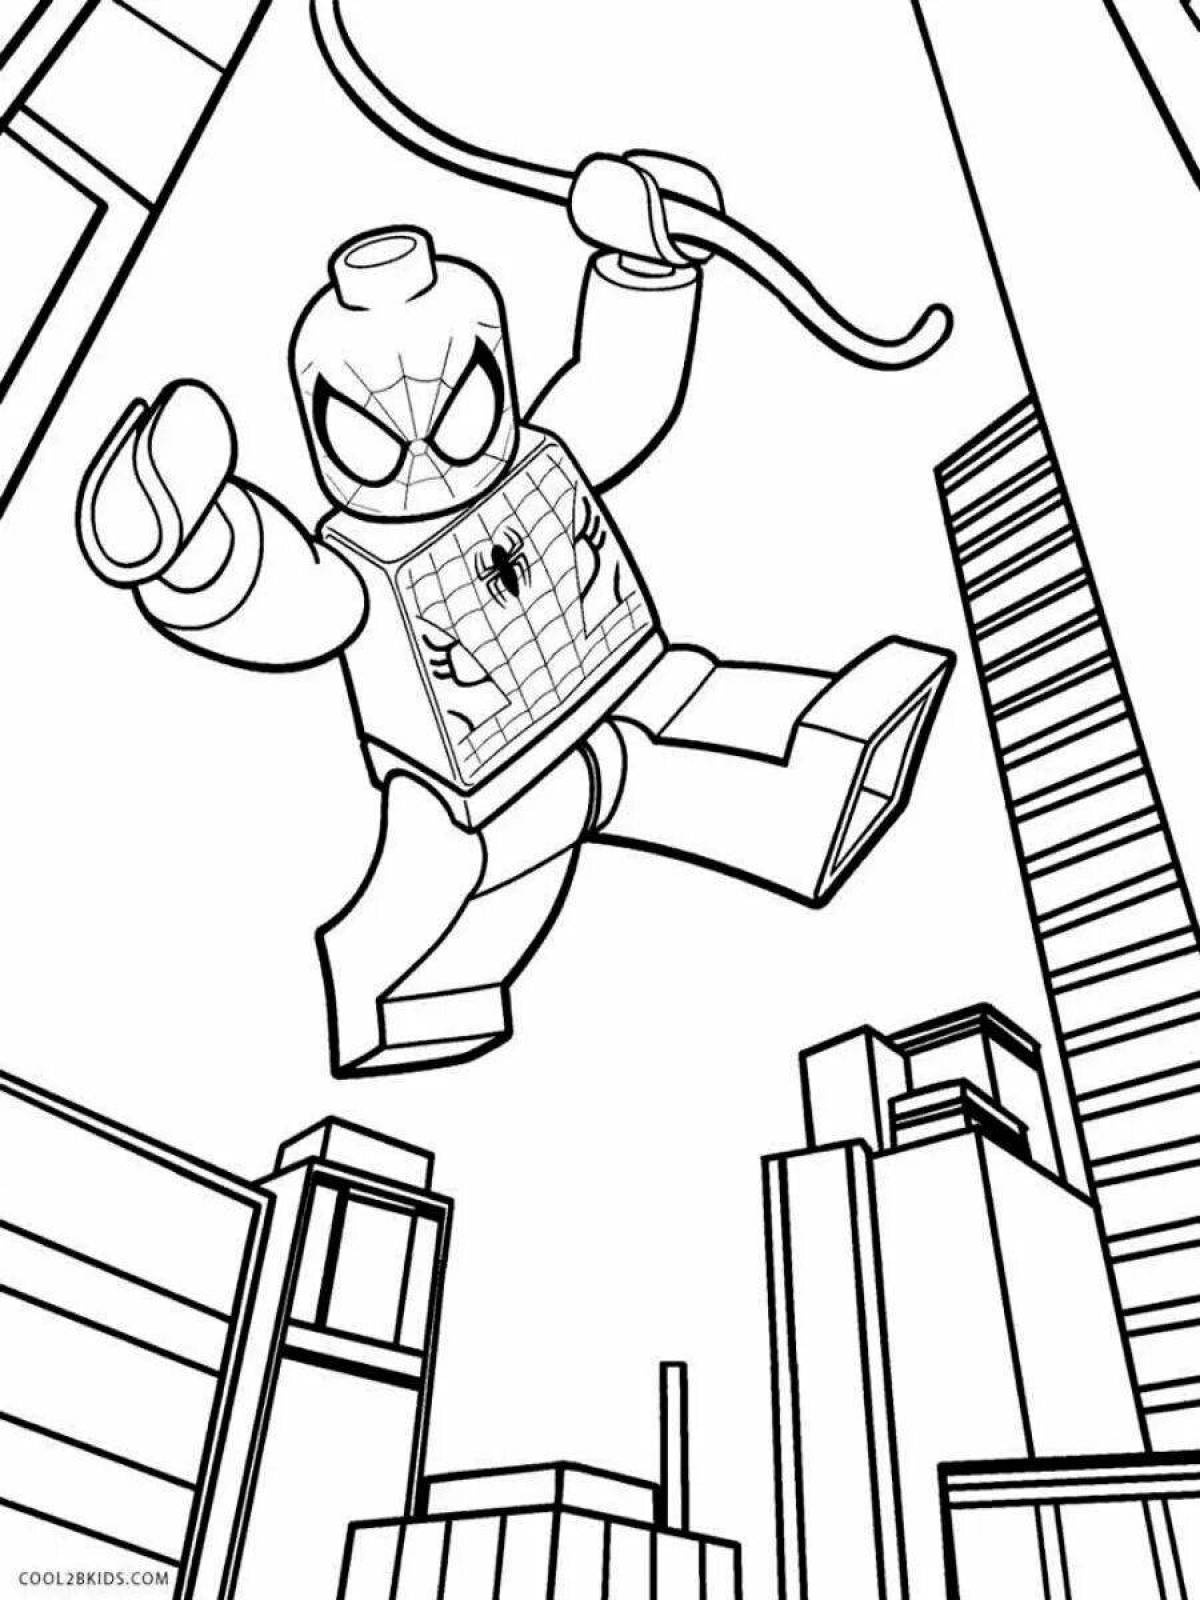 Fancy coloring lego spiderman